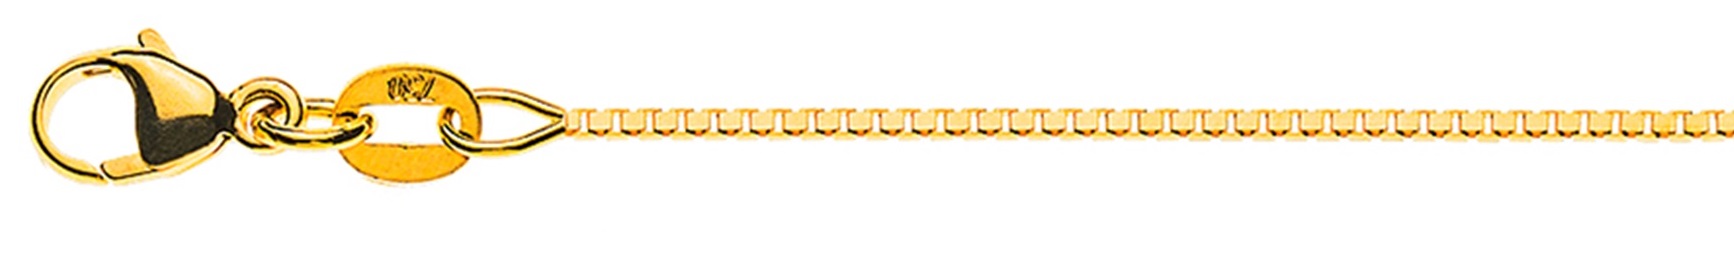 AURONOS Style Necklace yellow gold 9K Venetian chain diamond cut 38cm 0.9mm